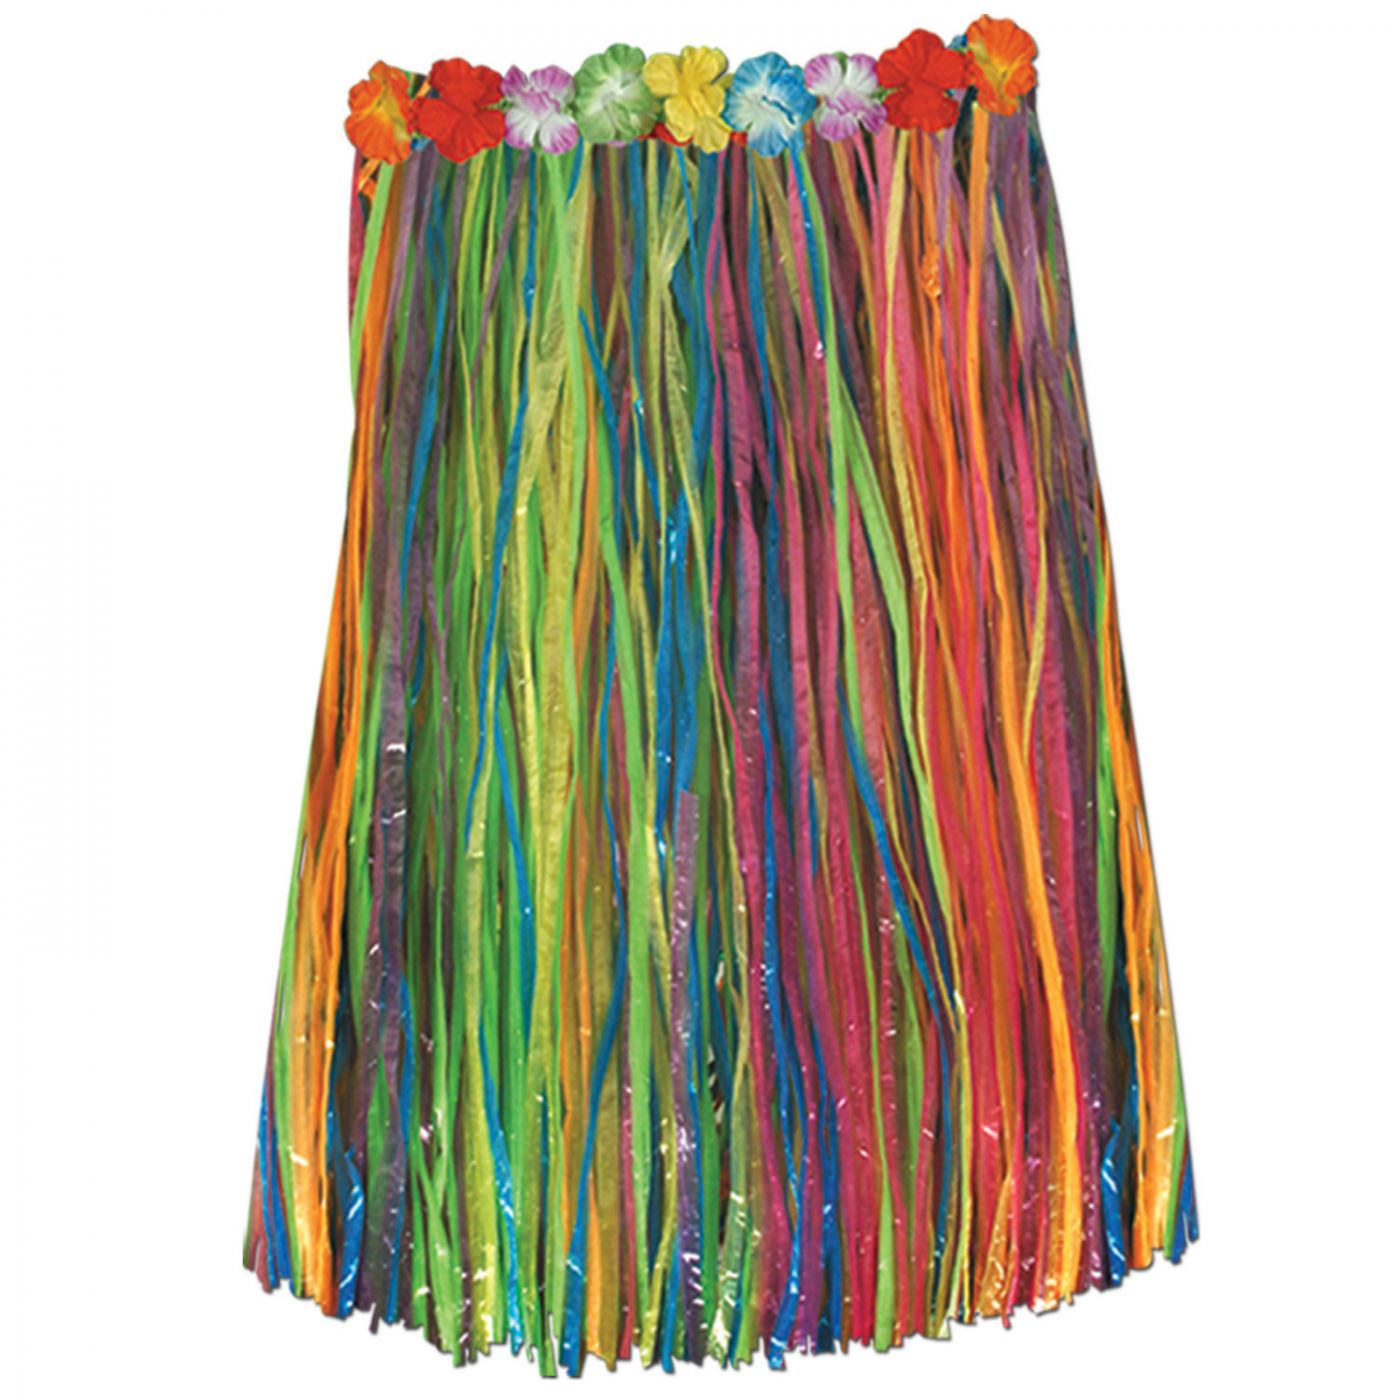 Image of Adult Artificial Grass Hula Skirt (12)